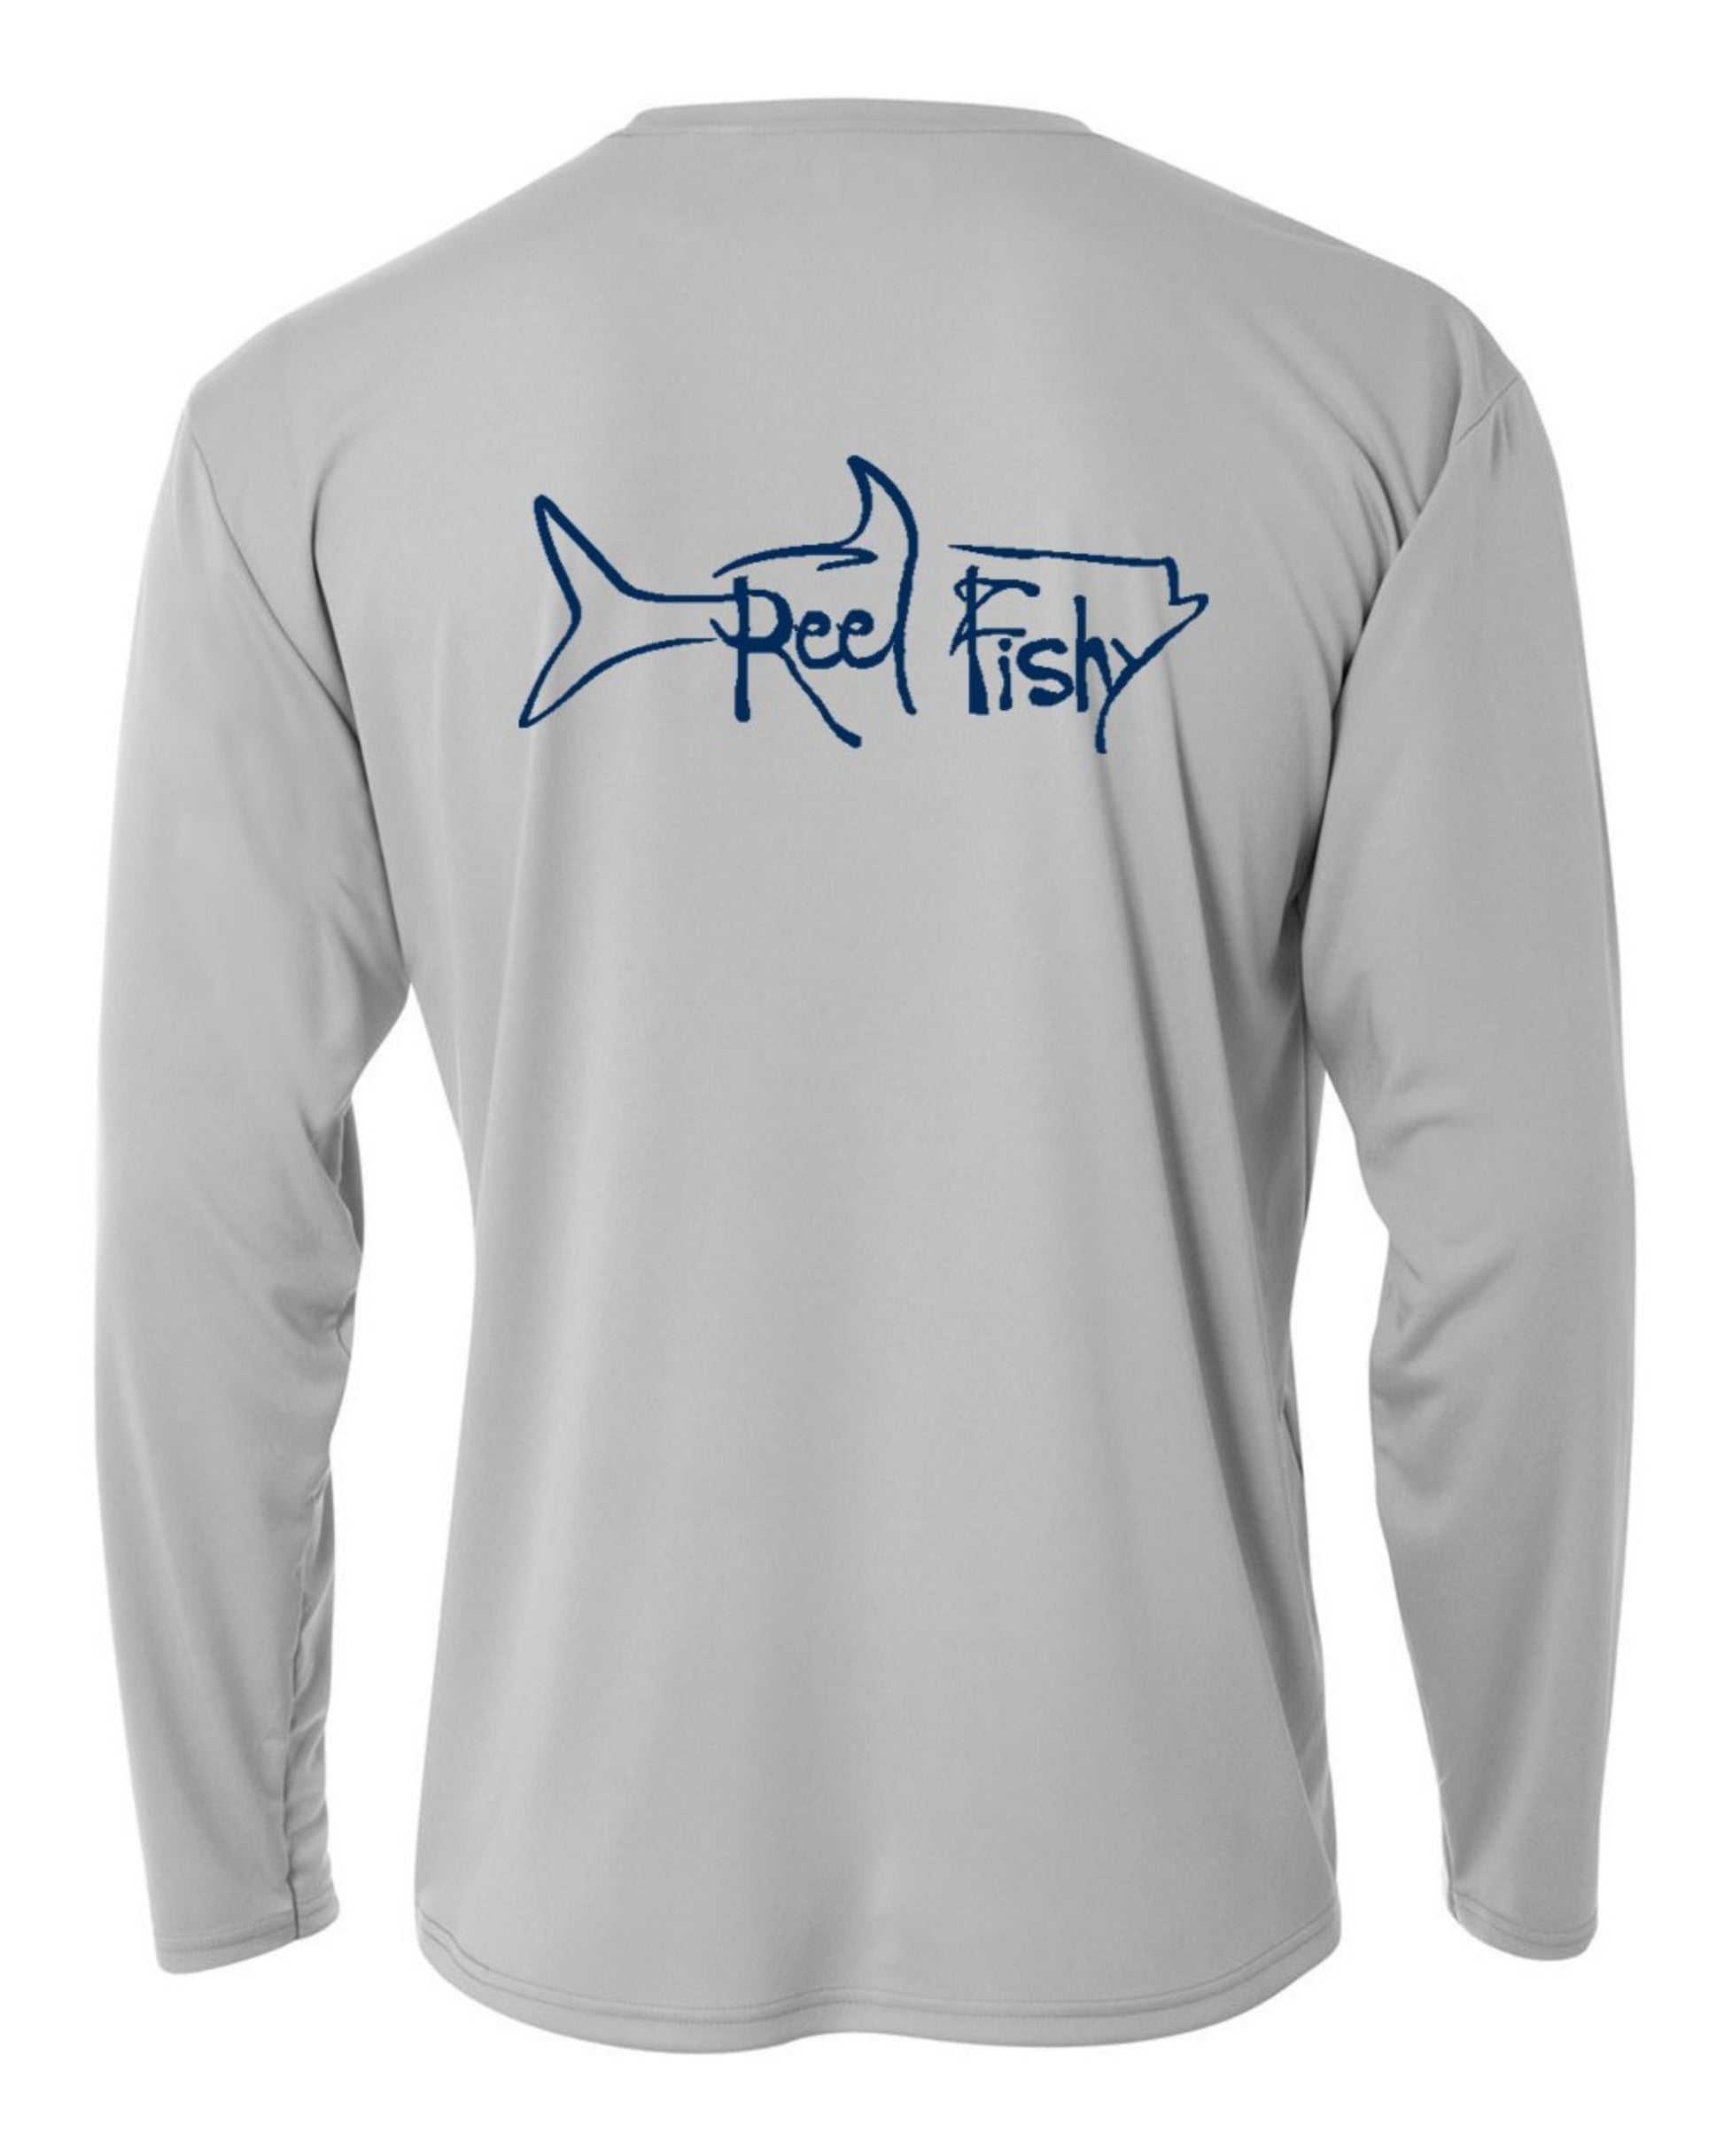 Youth Performance Dry-Fit Tarpon Fishing Shirts 50+Upf Sun Protection - Reel Fishy Apparel S / Lt. Gray L/S